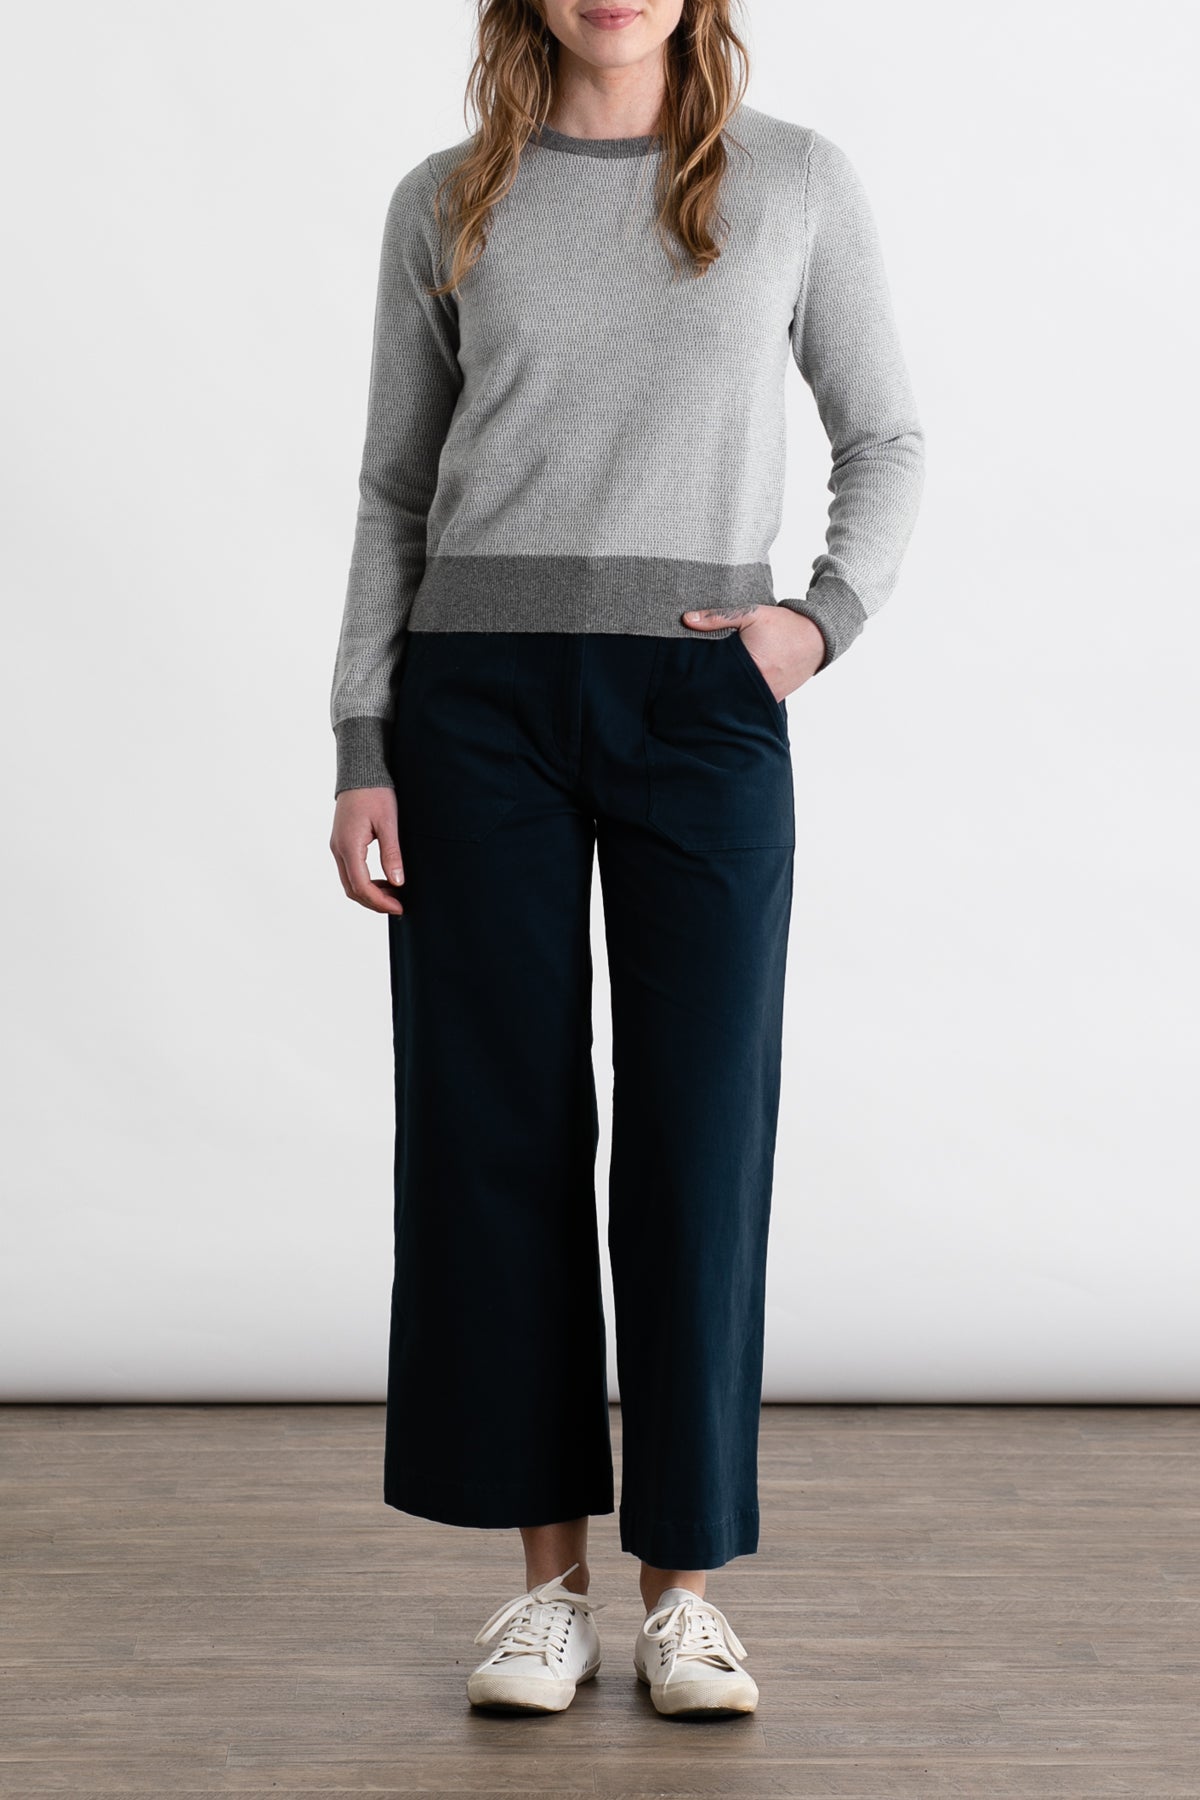 Pickering Sweater / Grey